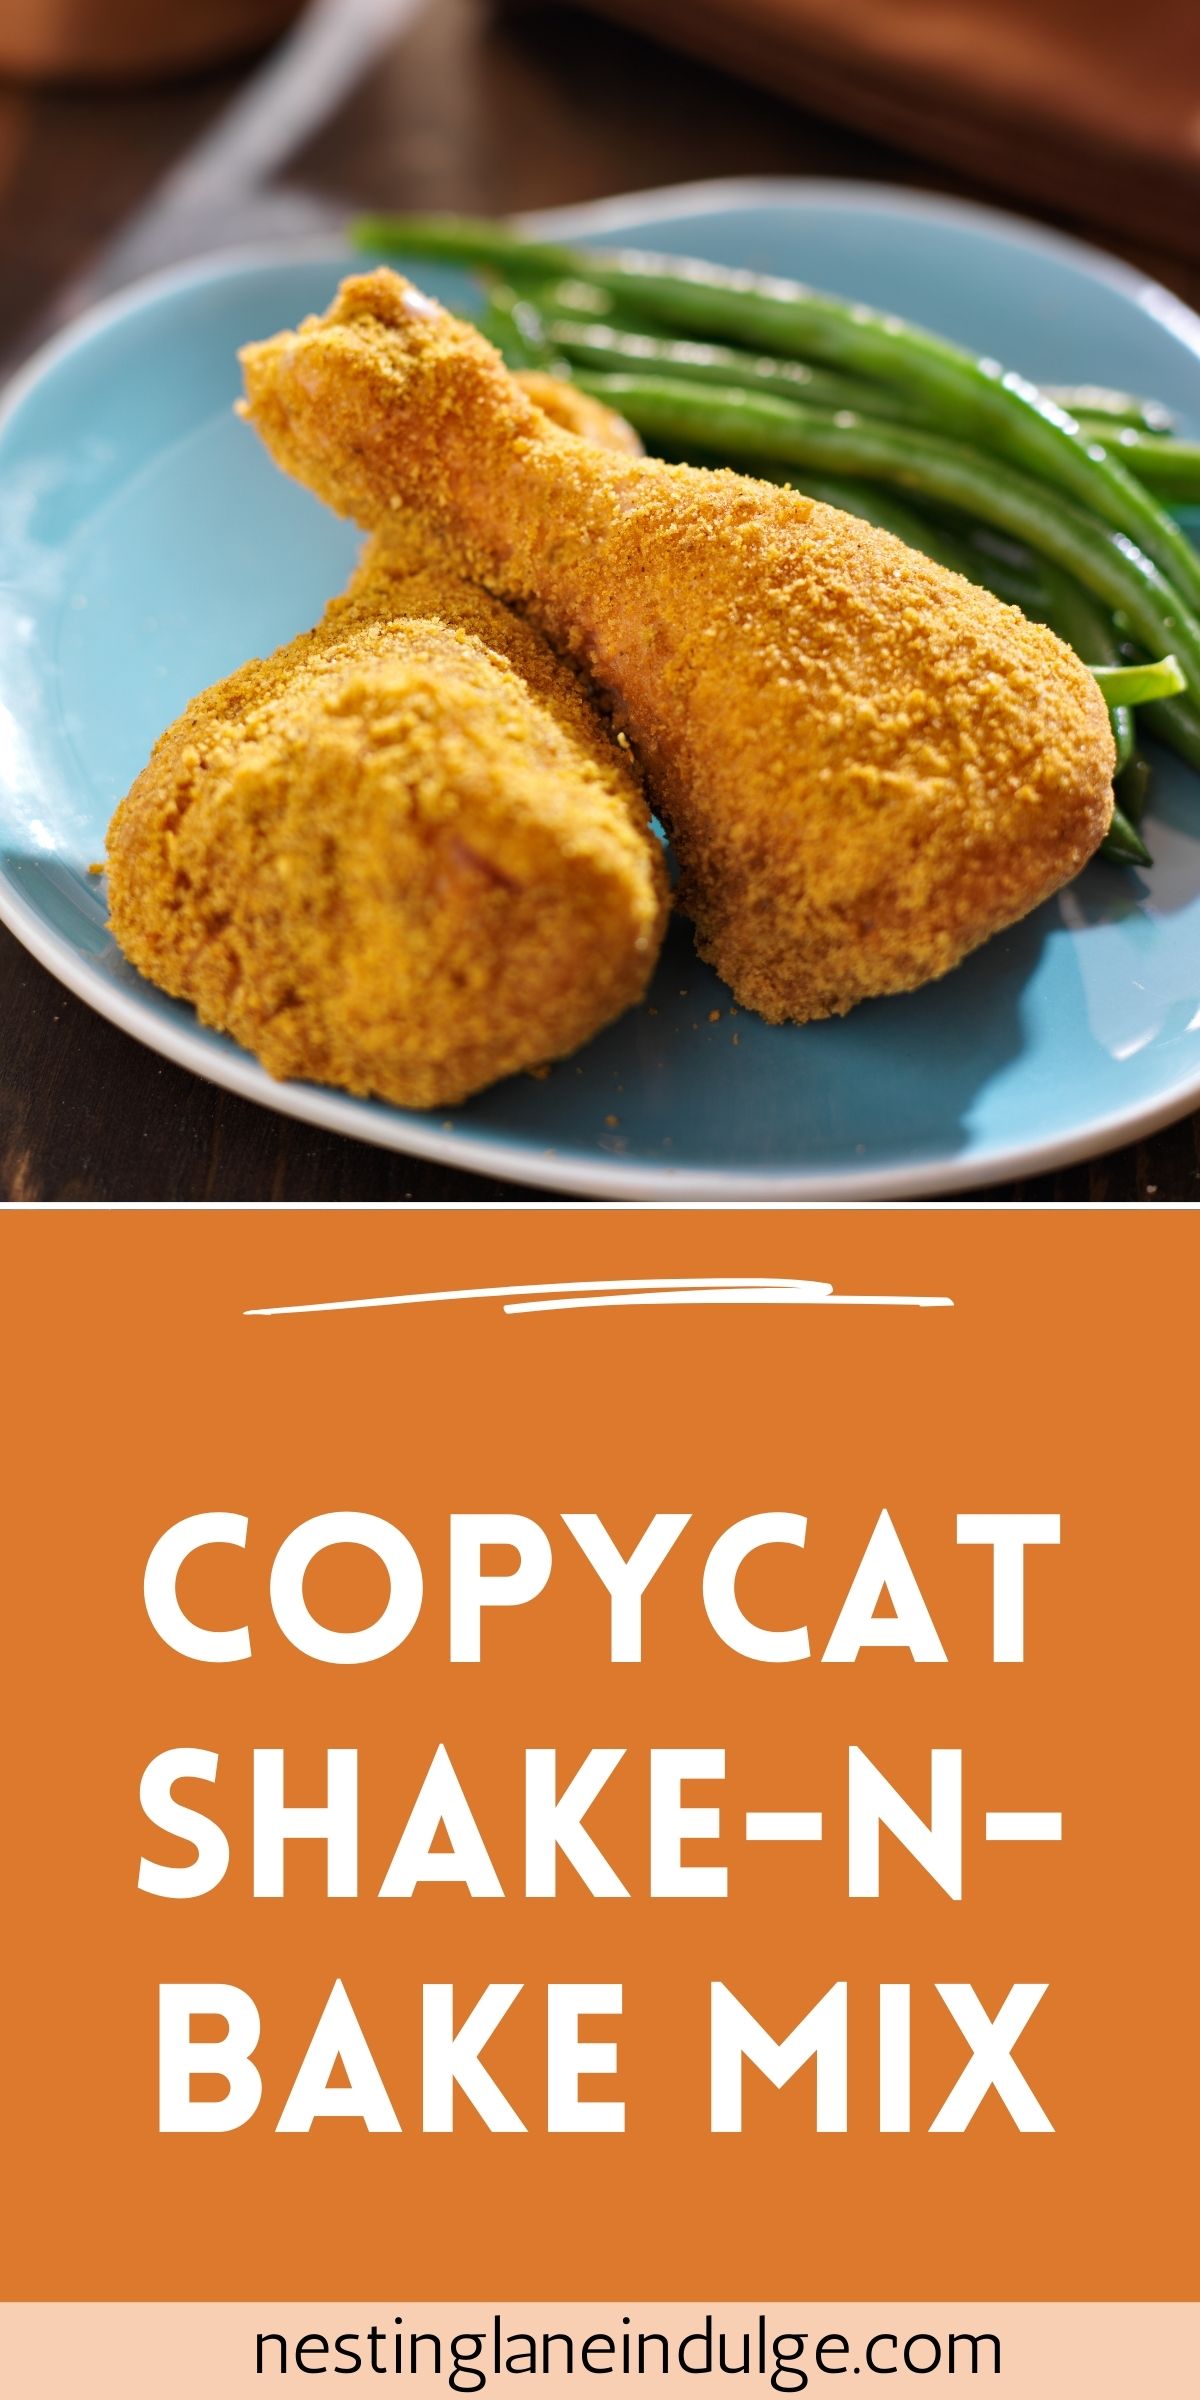 Graphic for Pinterest of Copycat Shake-n-Bake Mix Recipe.